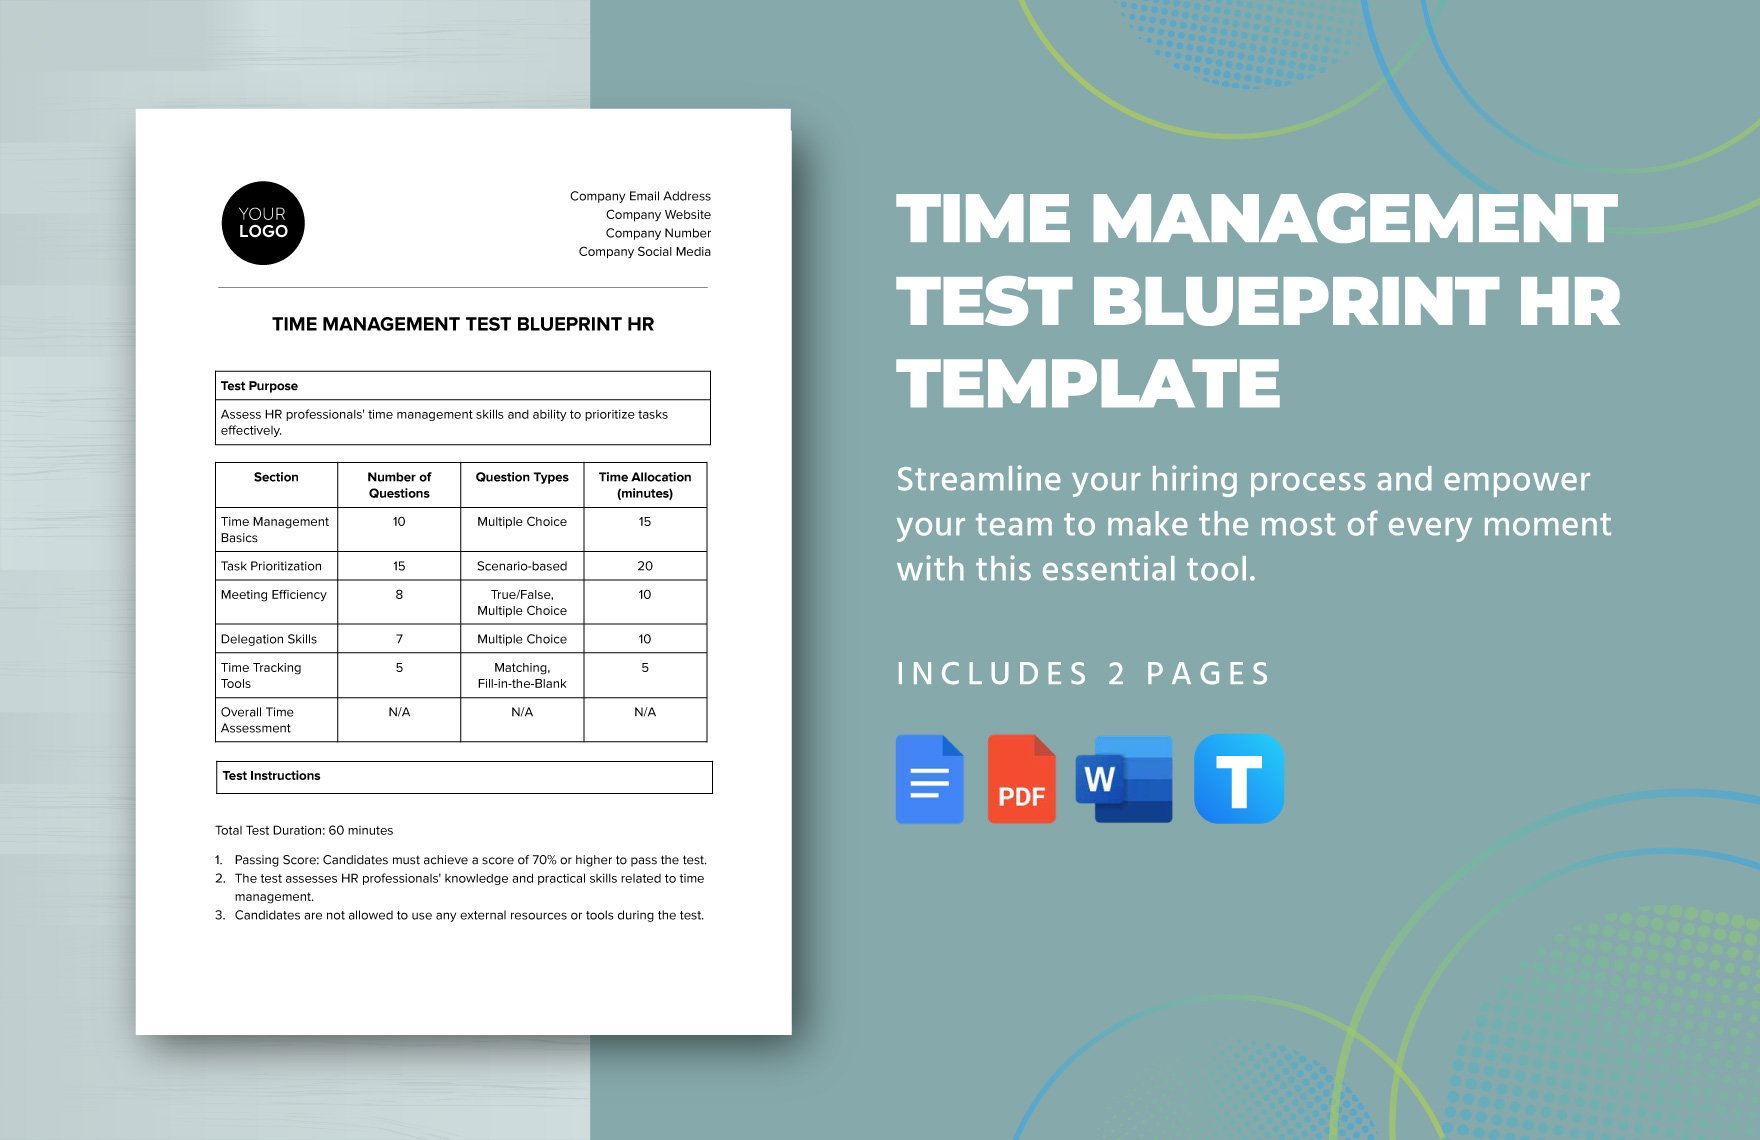 Time Management Test Blueprint HR Template in Word, Google Docs, PDF